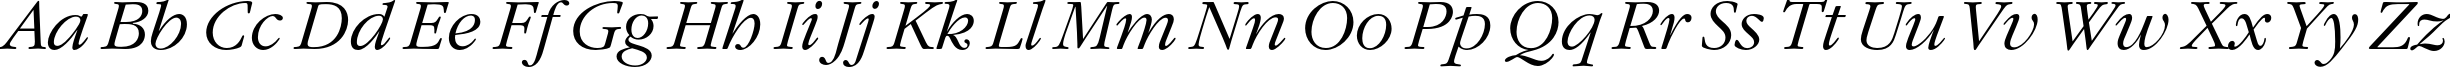 Пример написания английского алфавита шрифтом GaramondC Italic